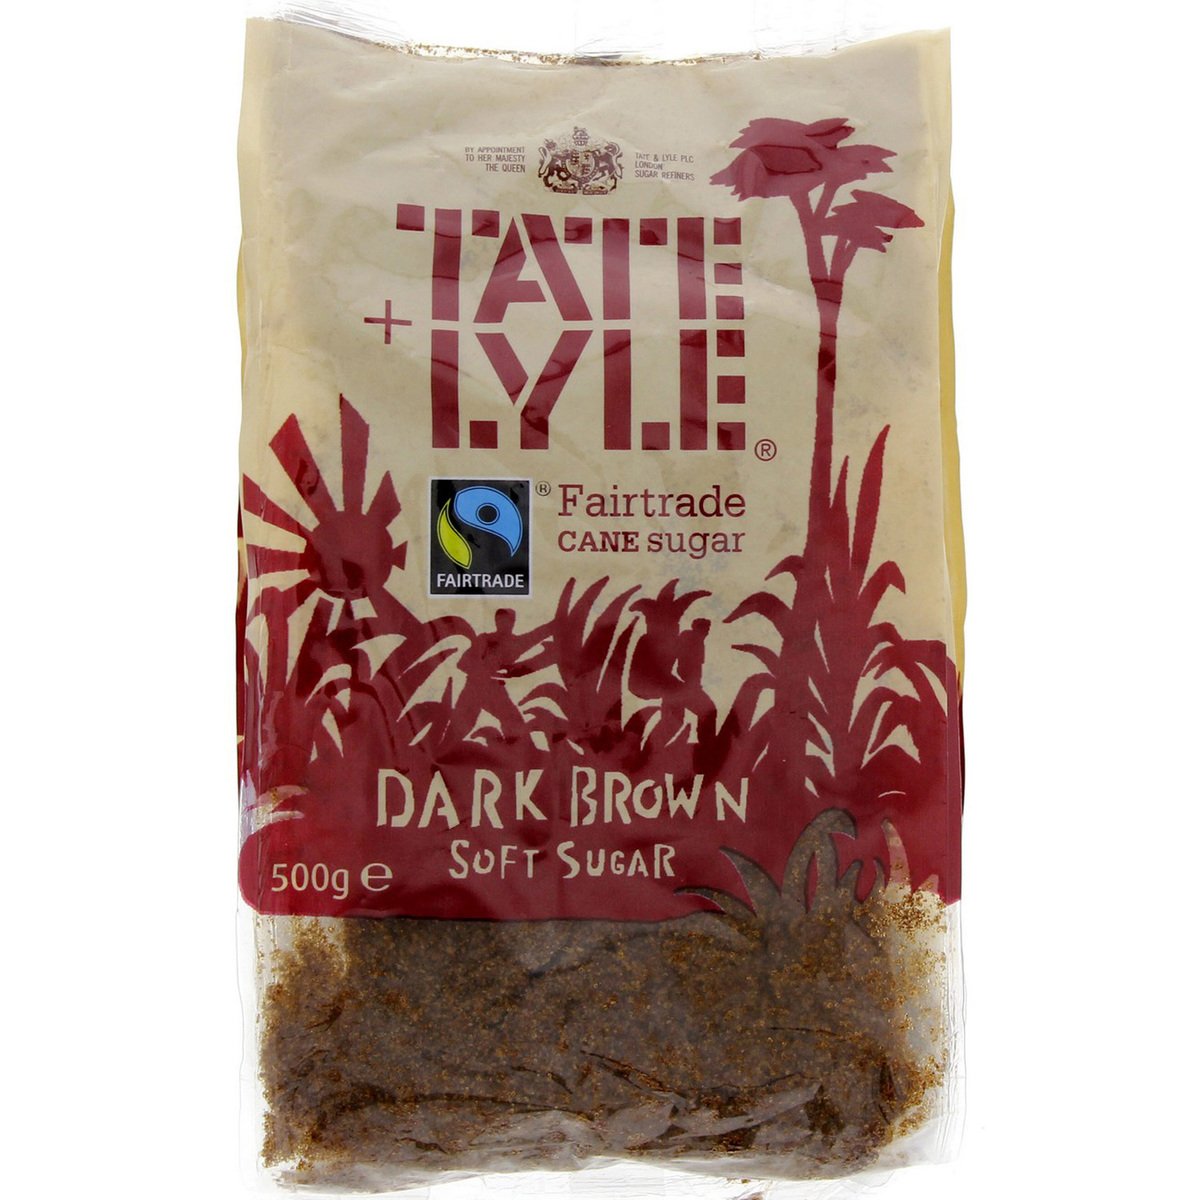 Tate Lyle Dark Brown Soft Sugar 500 gm